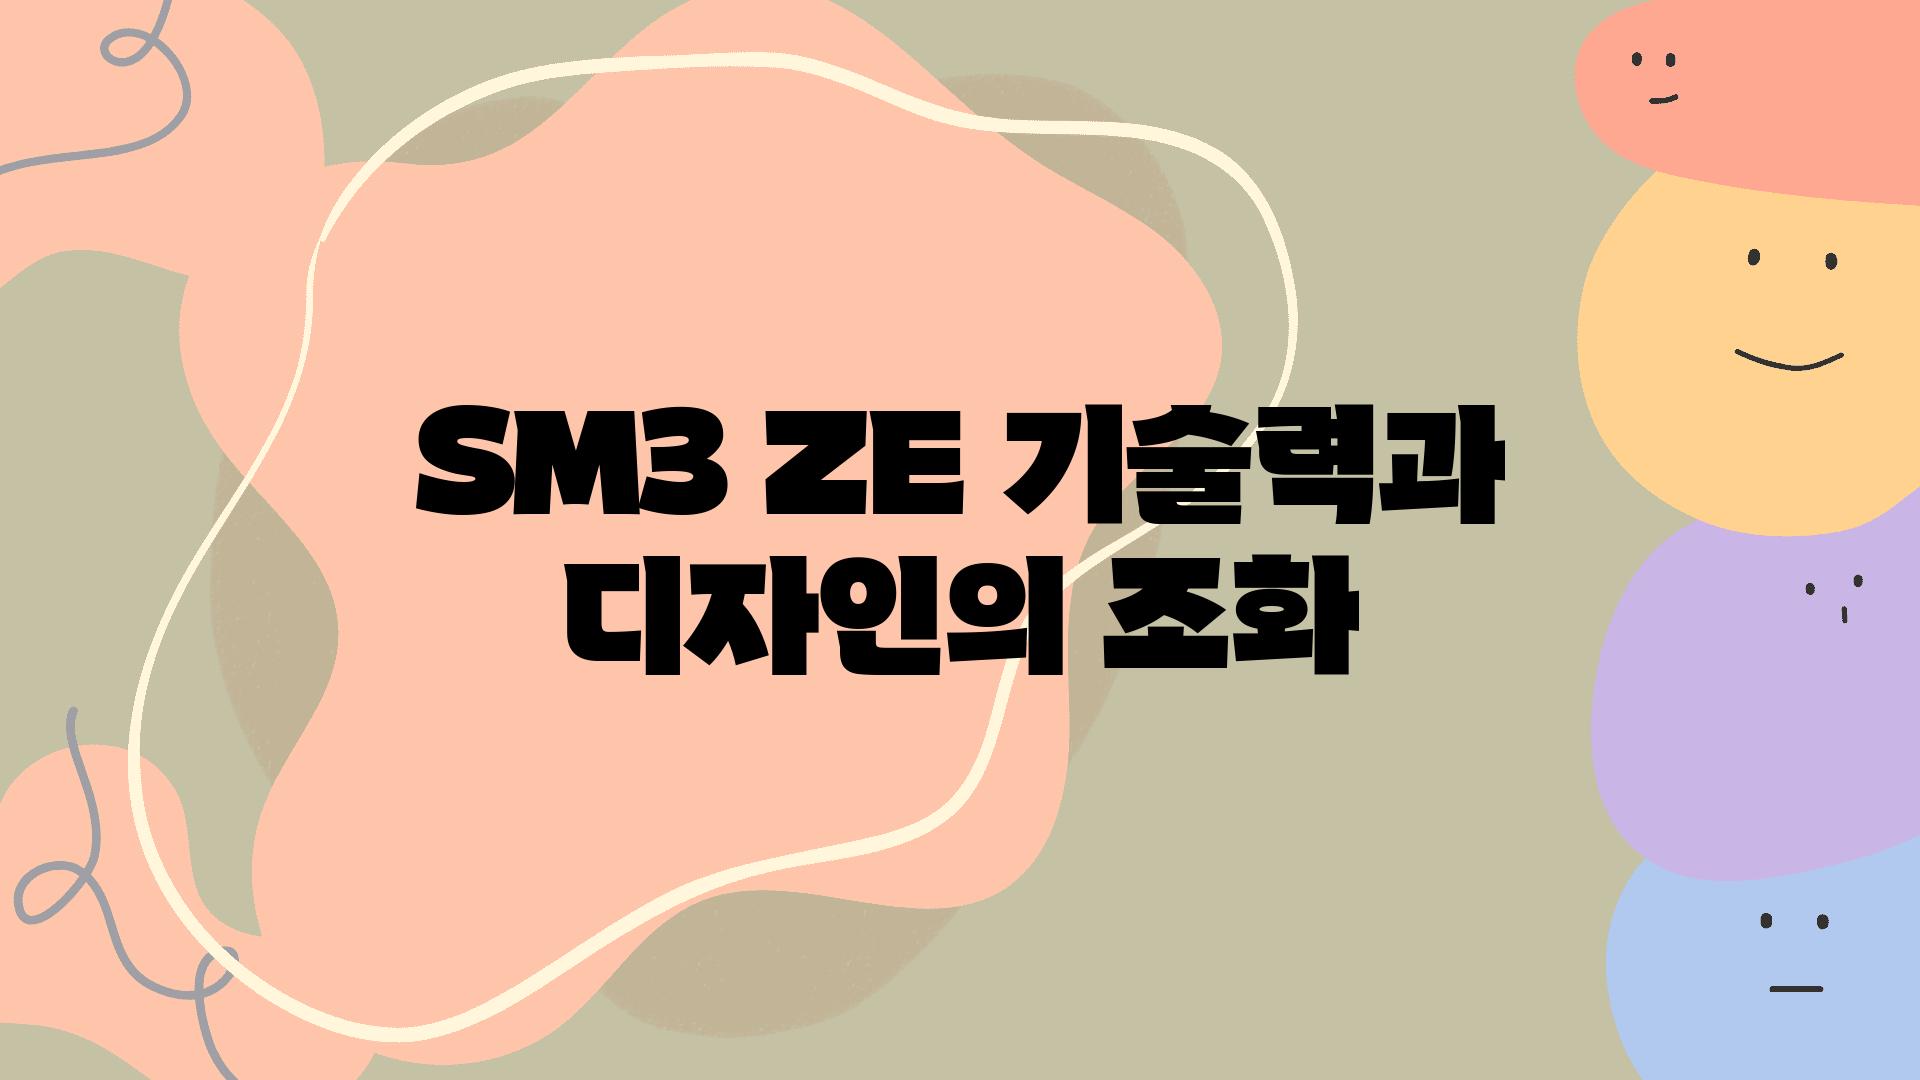 SM3 ZE 기술력과 디자인의 조화